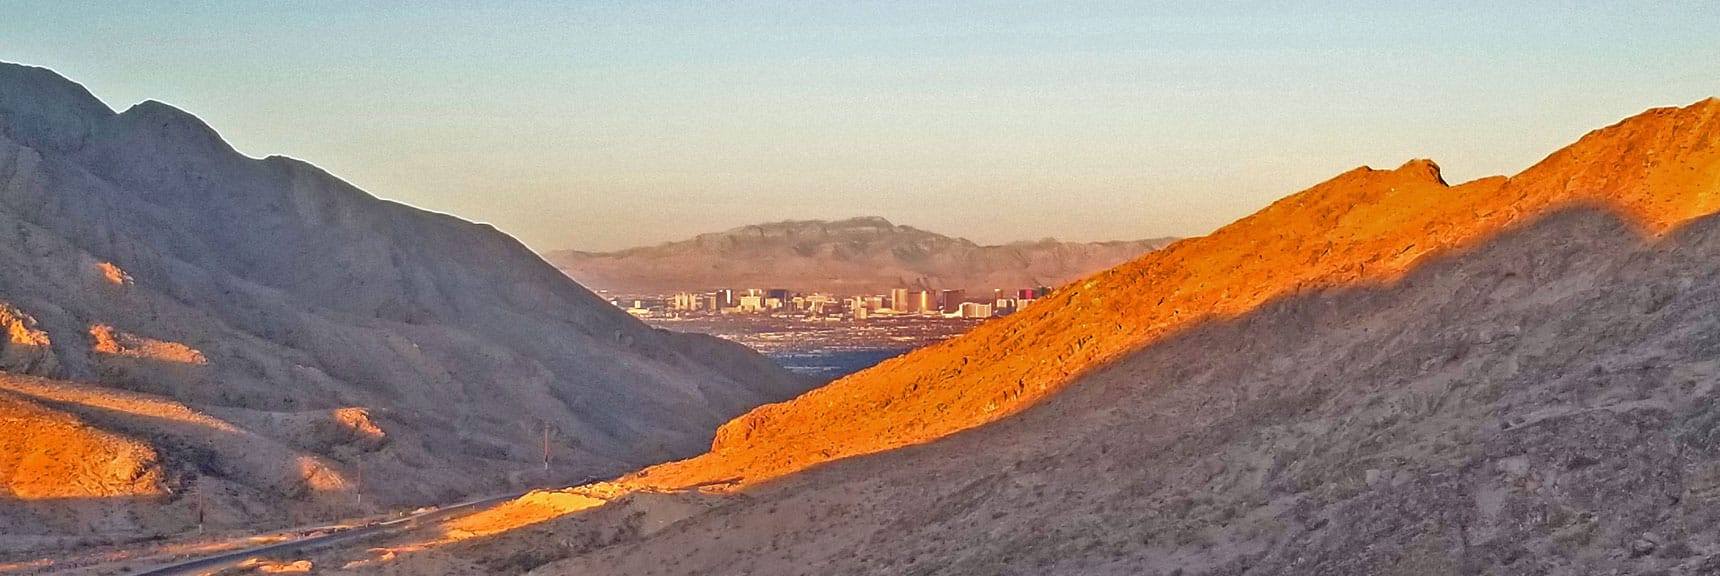 Las Vegas Strip, Potosi Mt. at Sunrise Viewed from Saddle on Trail Toward Sunrise Mountain | Sunrise Mountain, Las Vegas, Nevada